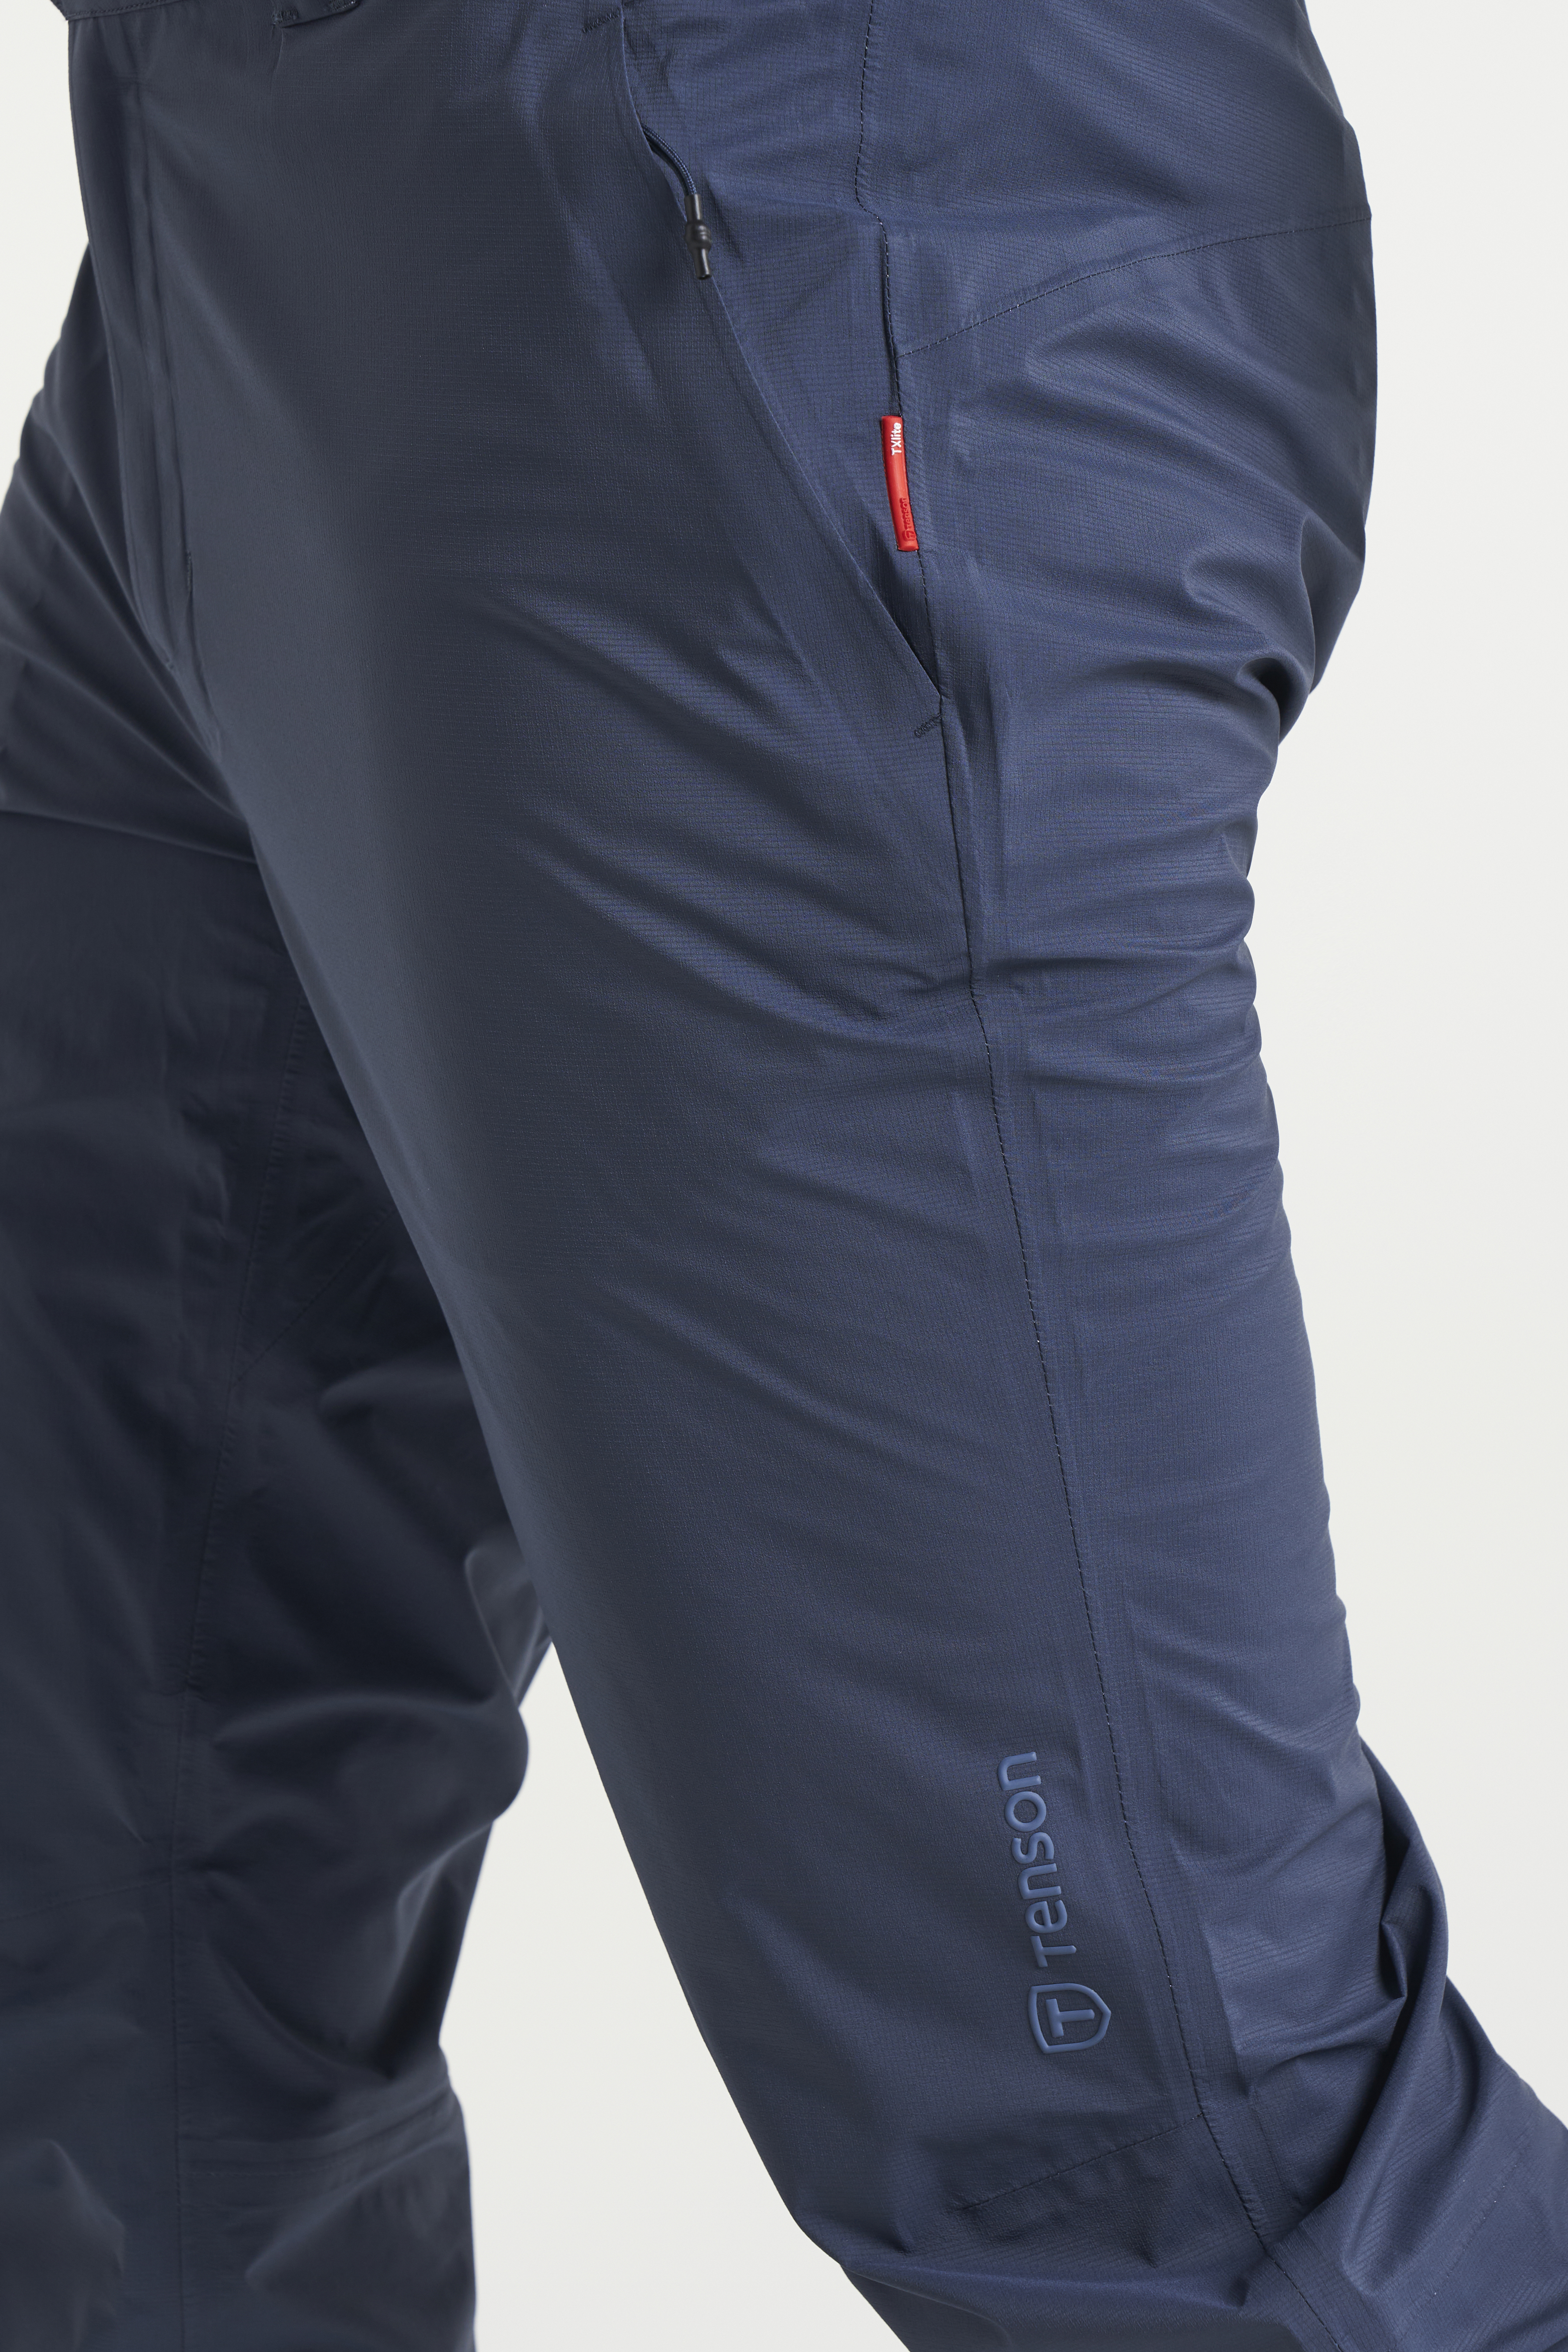 All Waterproof Jackets & Pants | Lightweight, packable rain coats & waterproof  trousers – Montane - UK